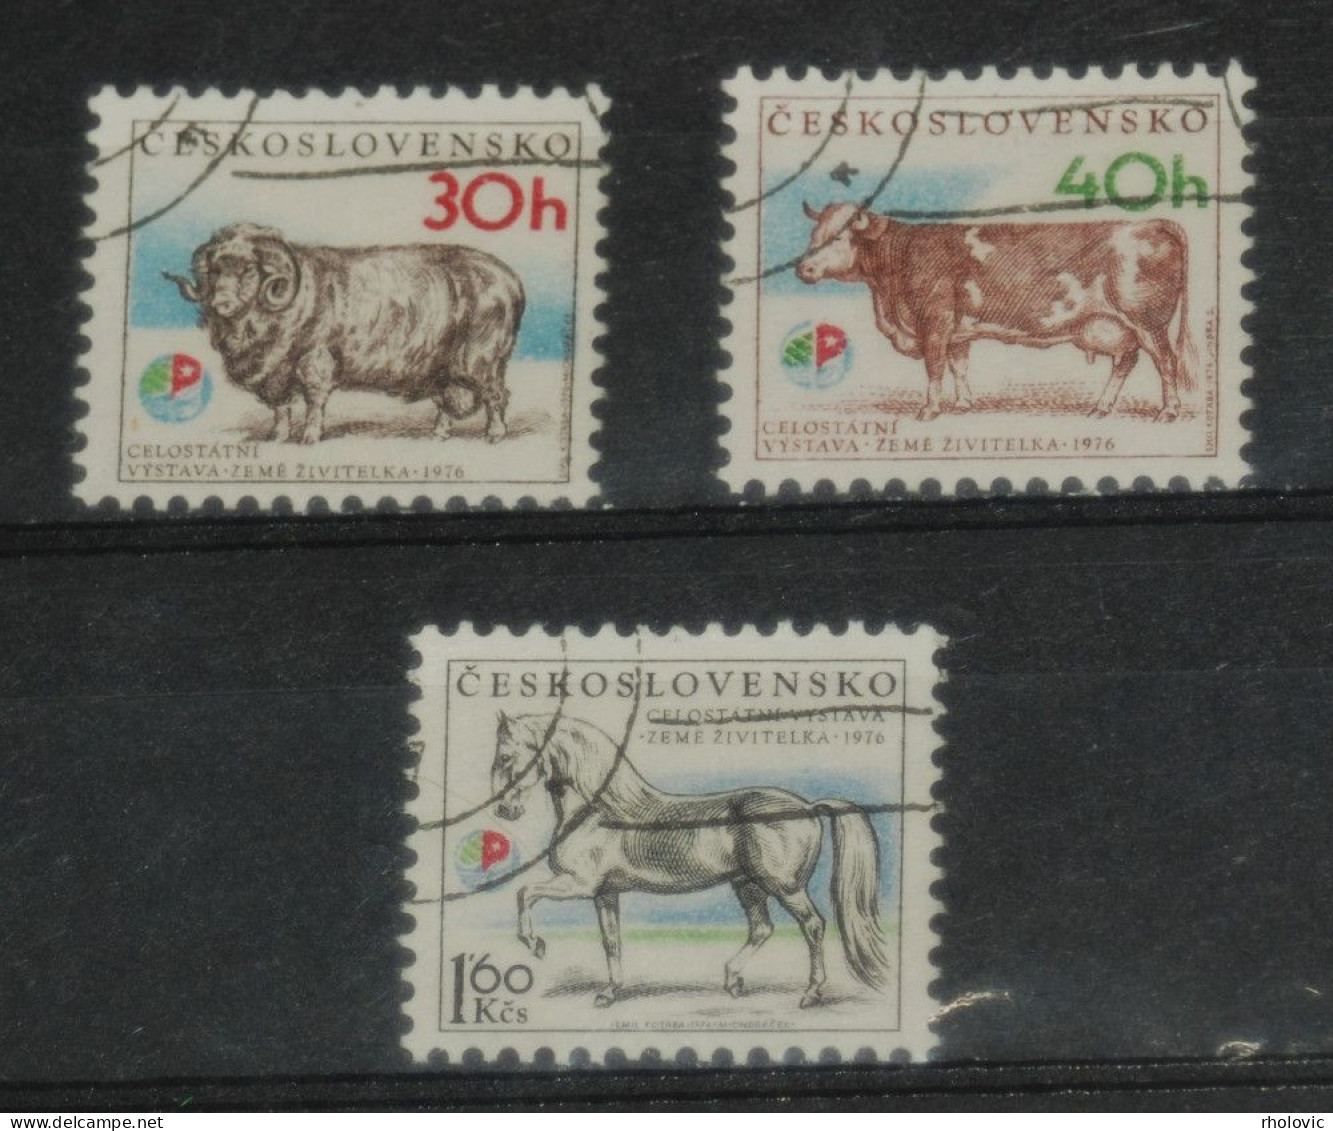 CZECHOSLOVAKIA 1976, Agricultural Exhibition, Horses, Cown, Sheep, Animals, Fauna, Mi #2336-8, Used - Farm